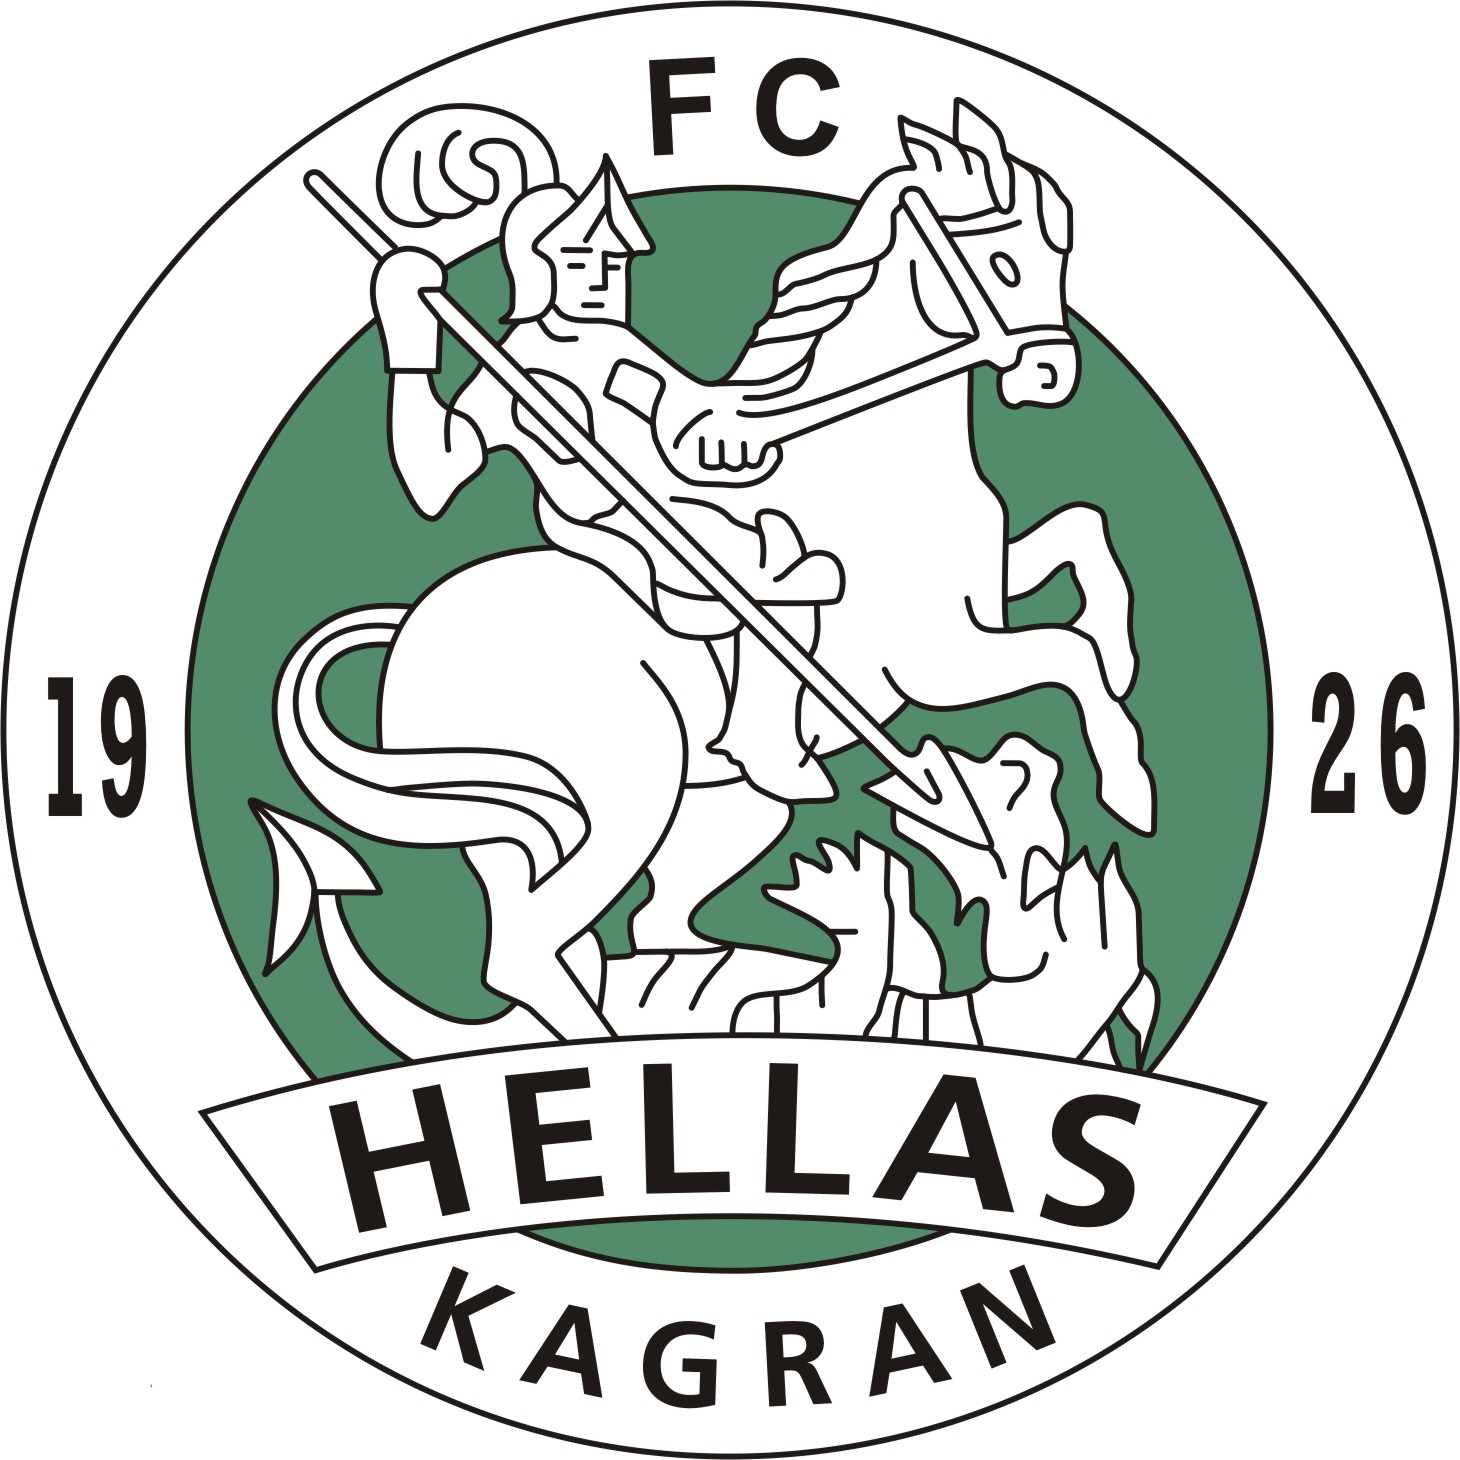 Hellas Kagran